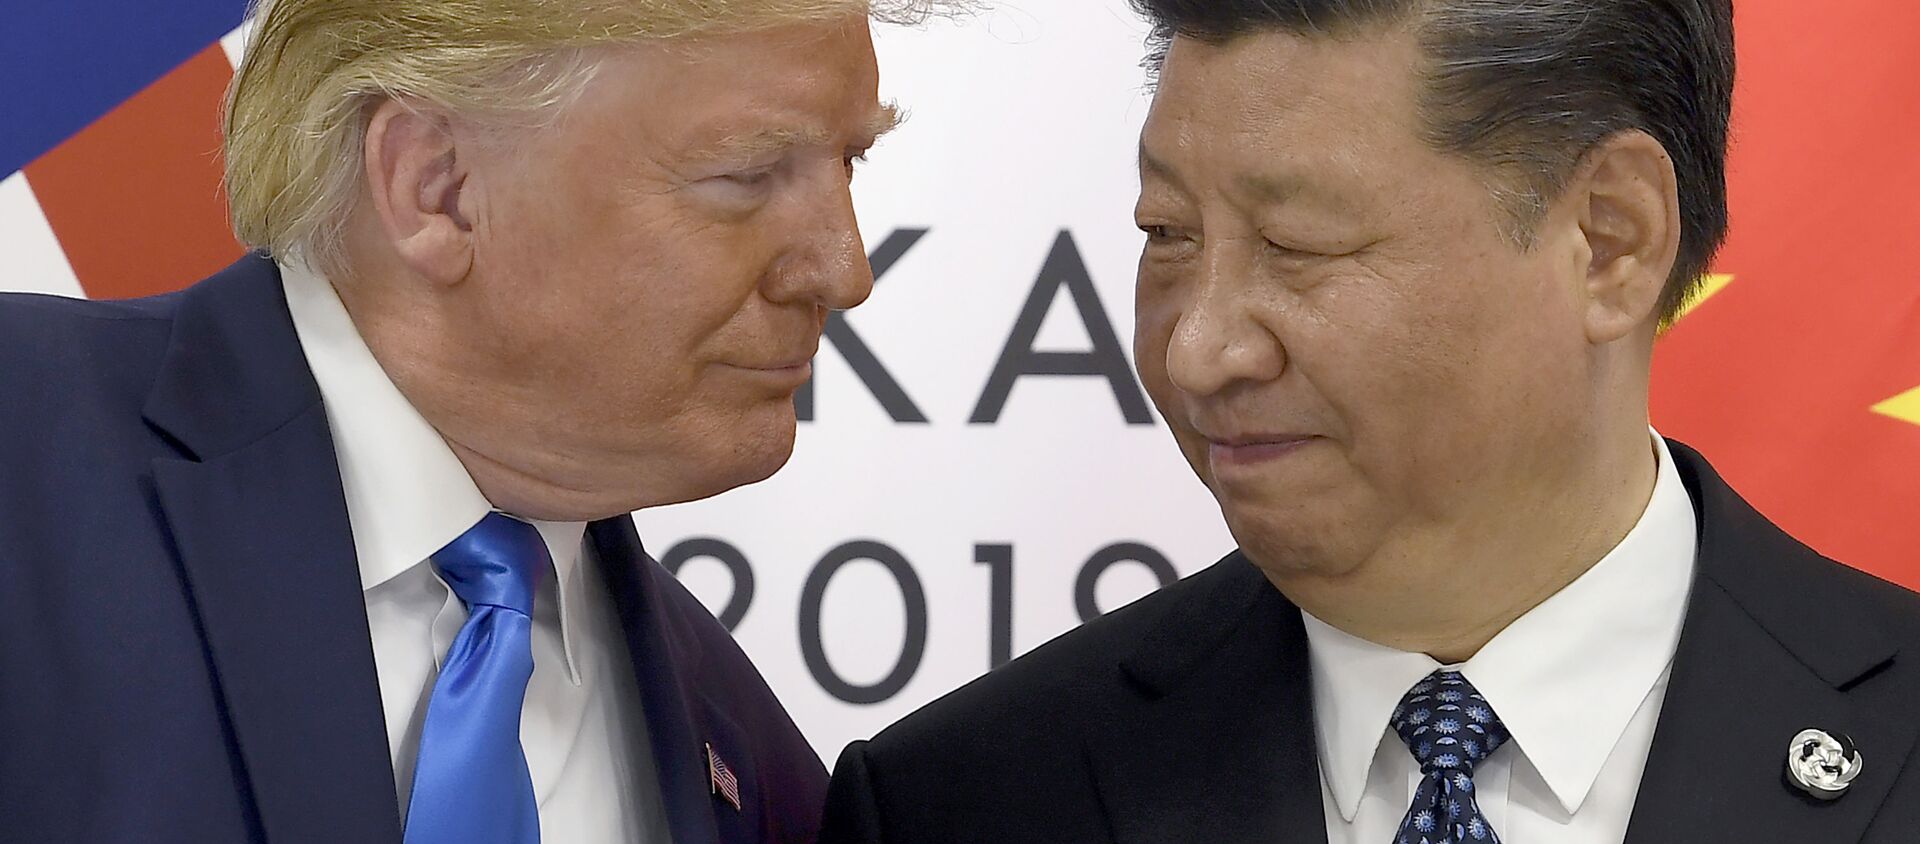 Президент США Дональд Трамп и председатель КНР Си Цзиньпин в ходе встречи на саммите G20 в Осаке. 29 июня 2019 - Sputnik Таджикистан, 1920, 29.08.2019